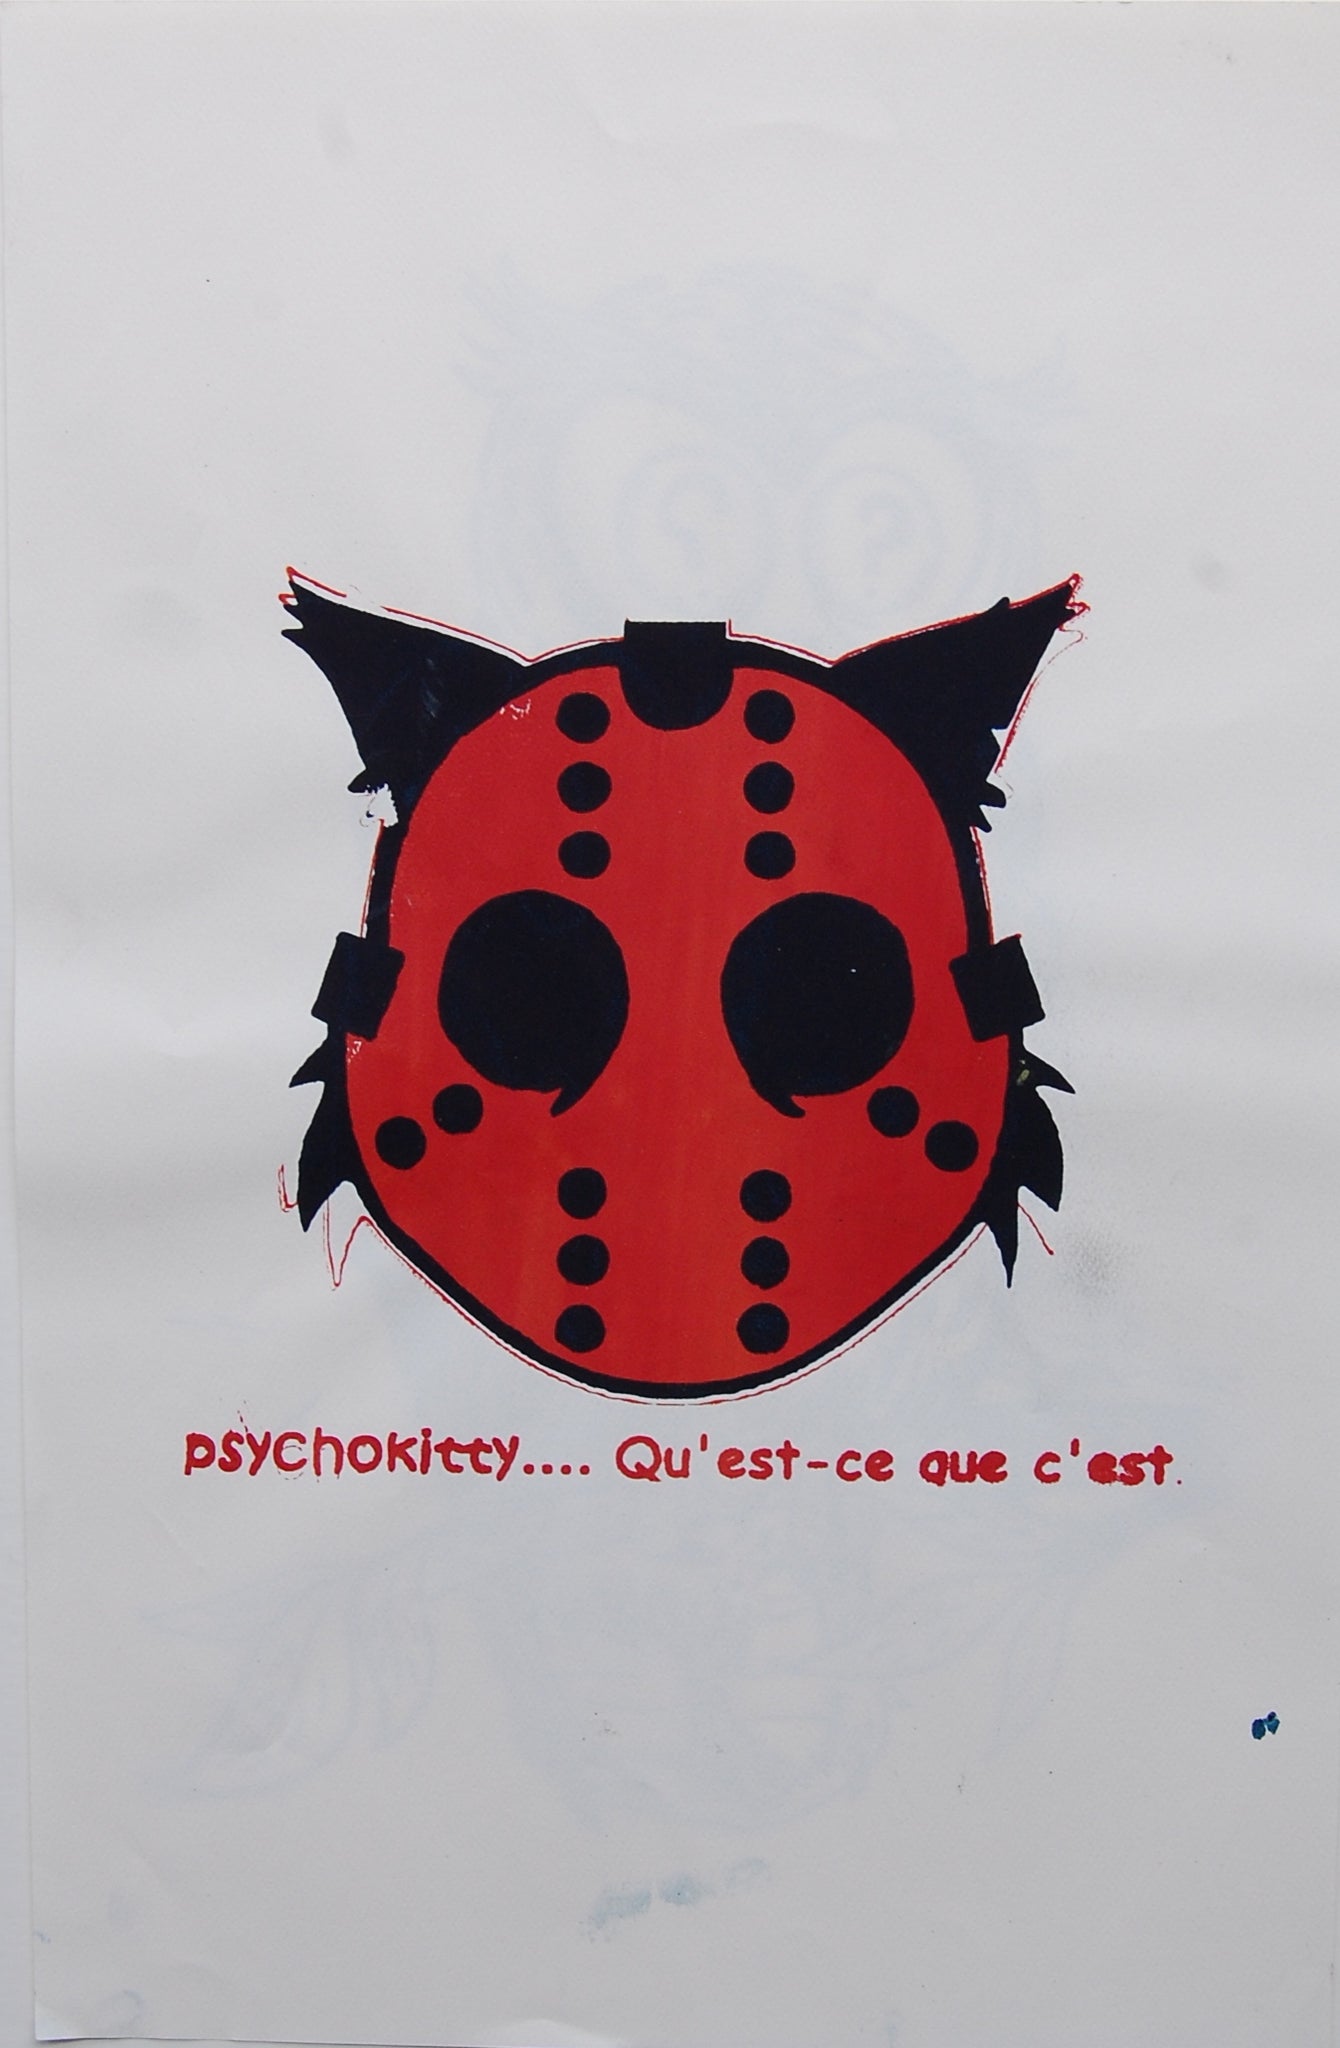 The Owl/Psychokitty Reversible print